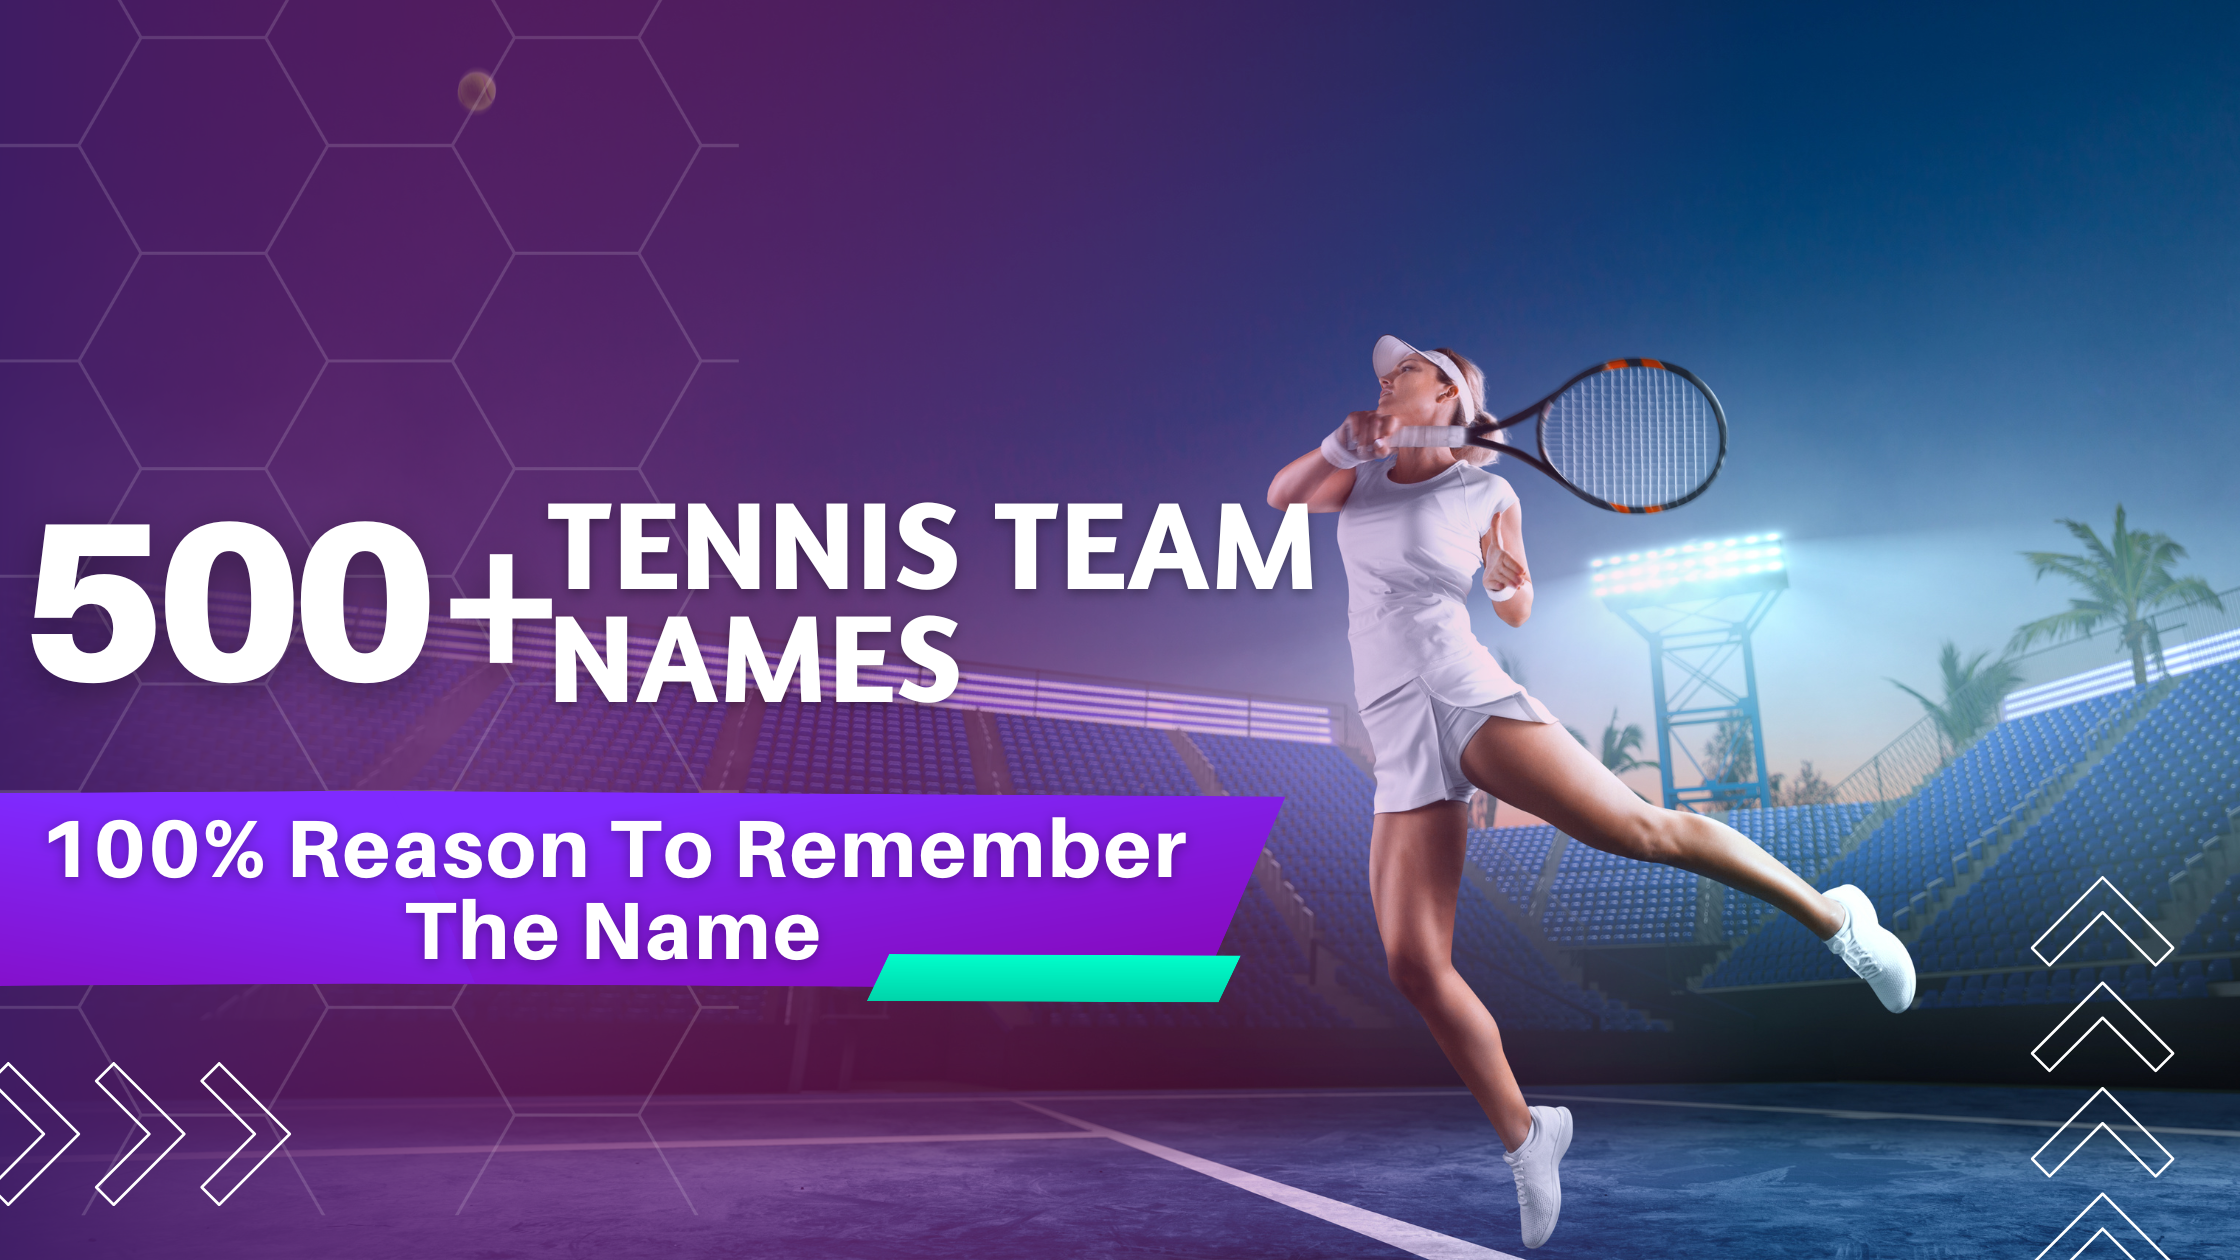 Remote.tools shares 500+ tennis team names